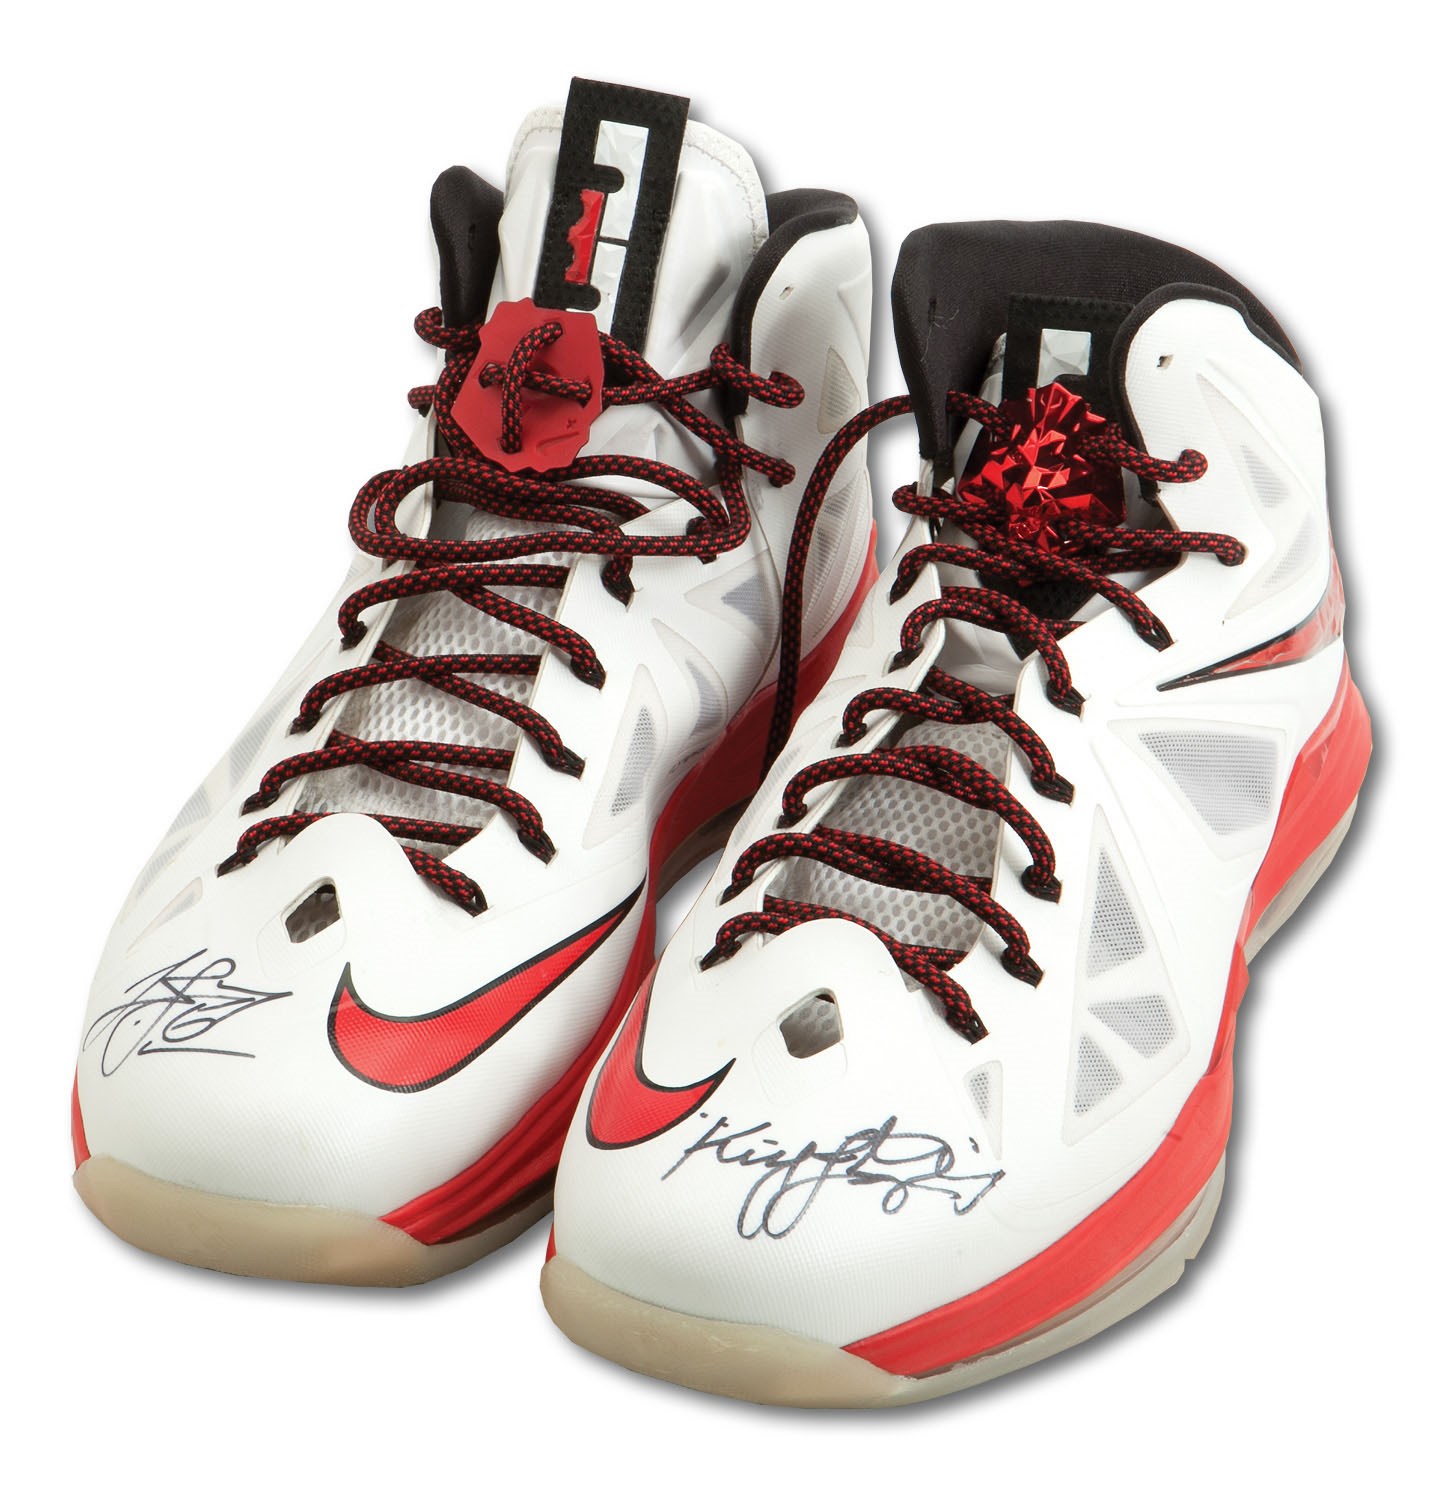 Lebron James 2011 Miami Heat game worn & signed sneakers, est